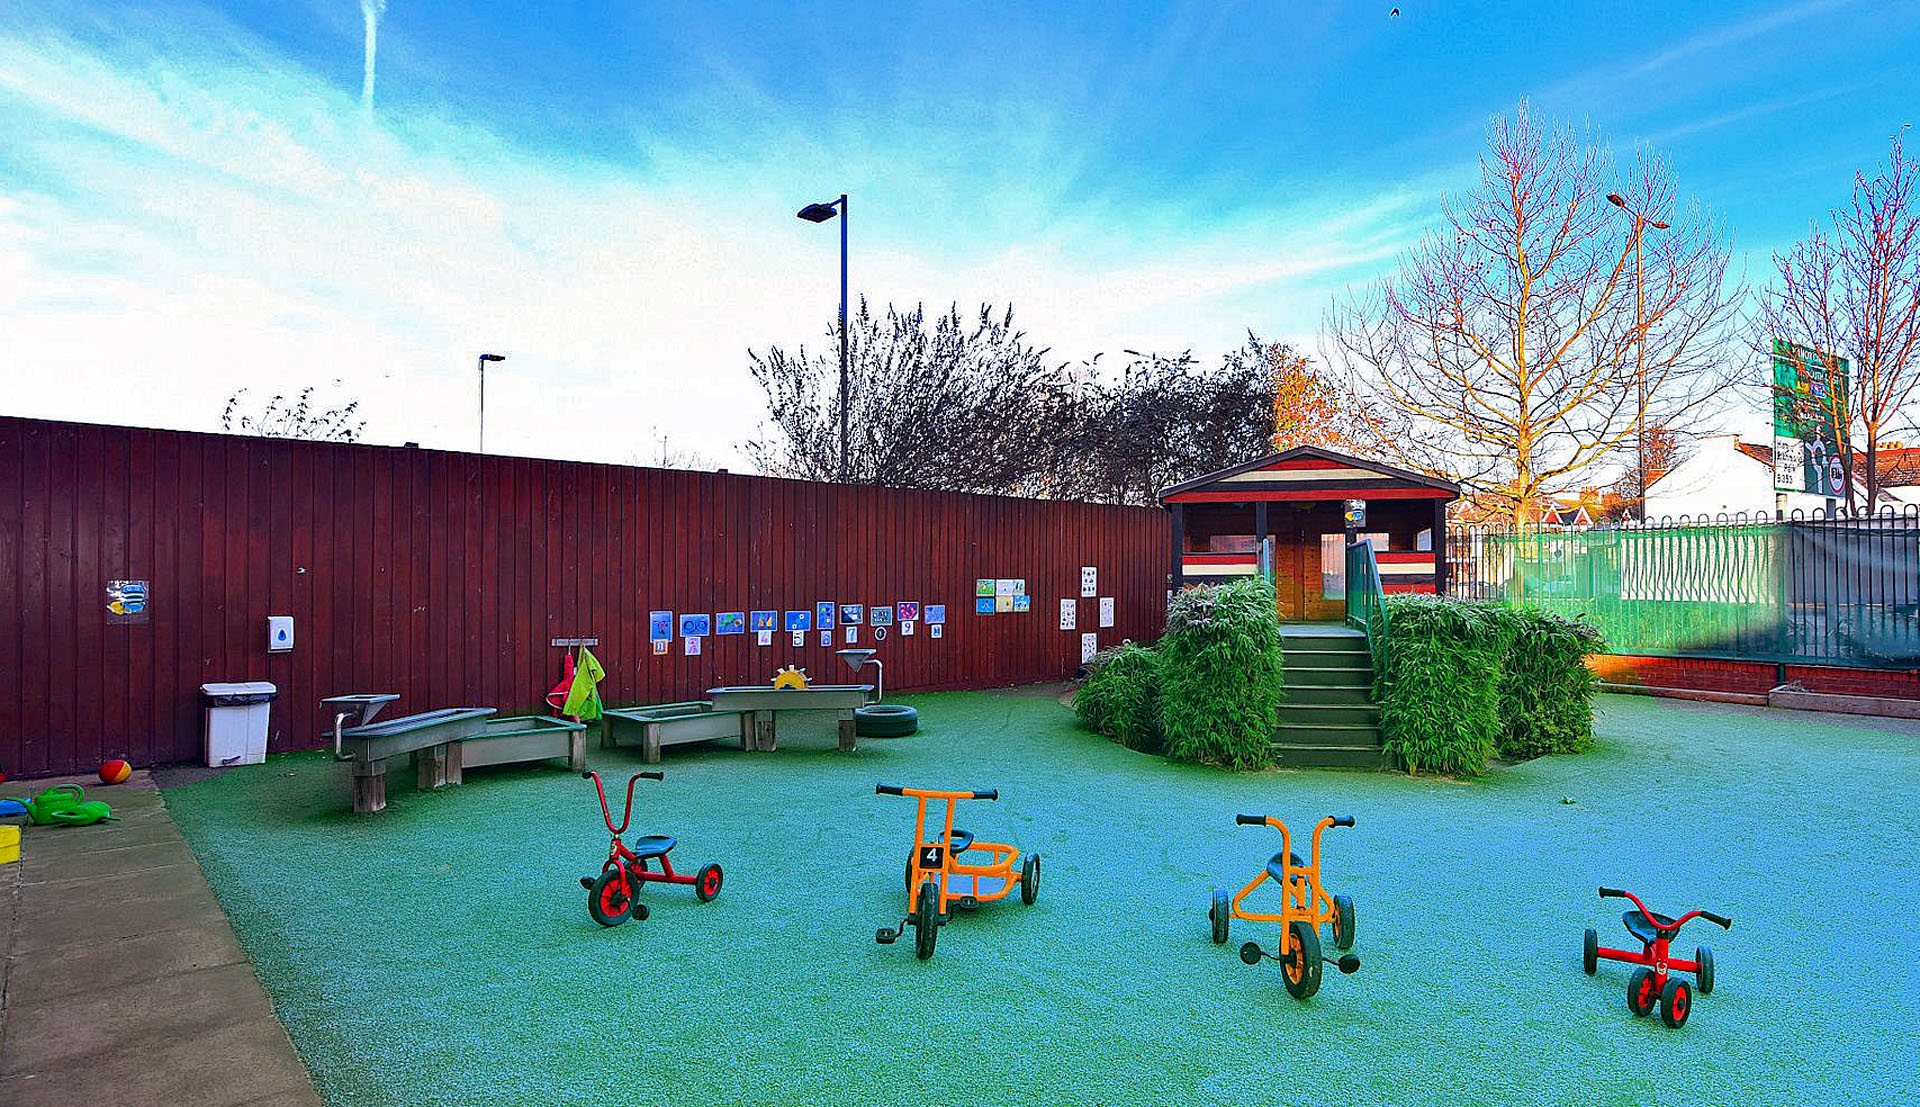 Bright Horizons Richmond Day Nursery and Preschool